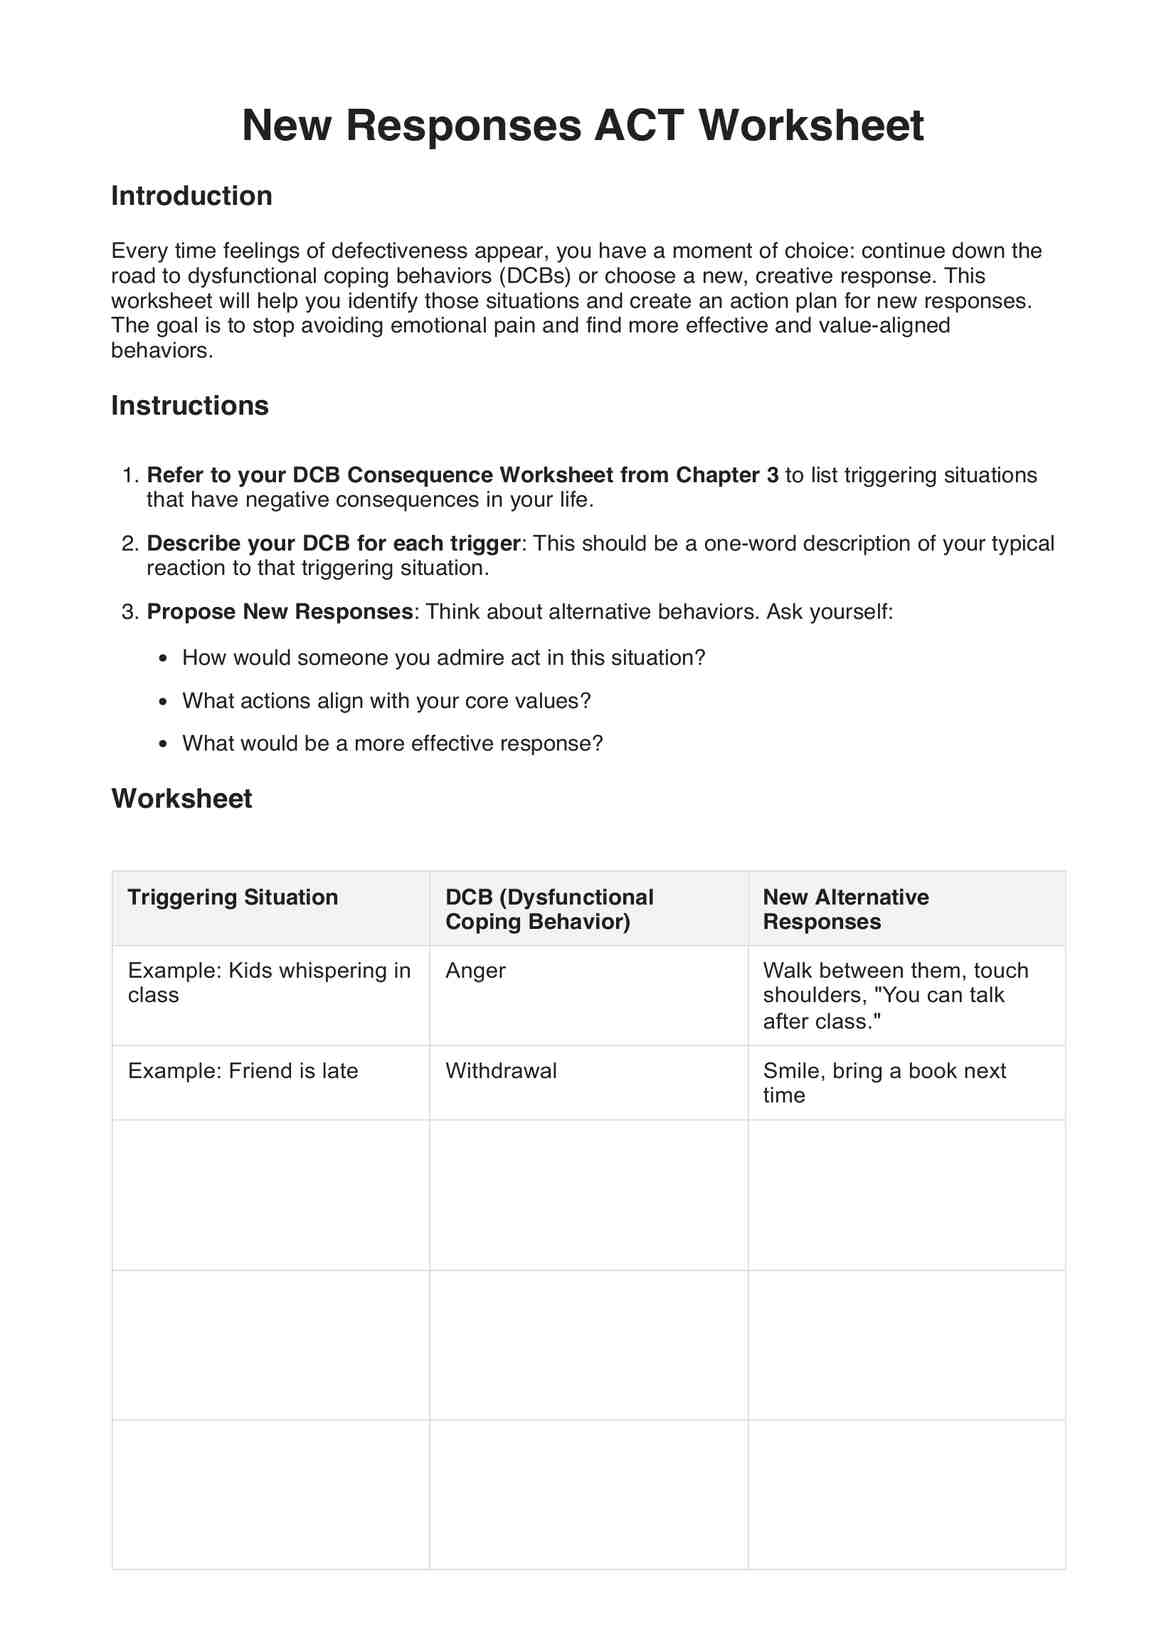 New Responses ACT Worksheet PDF Example